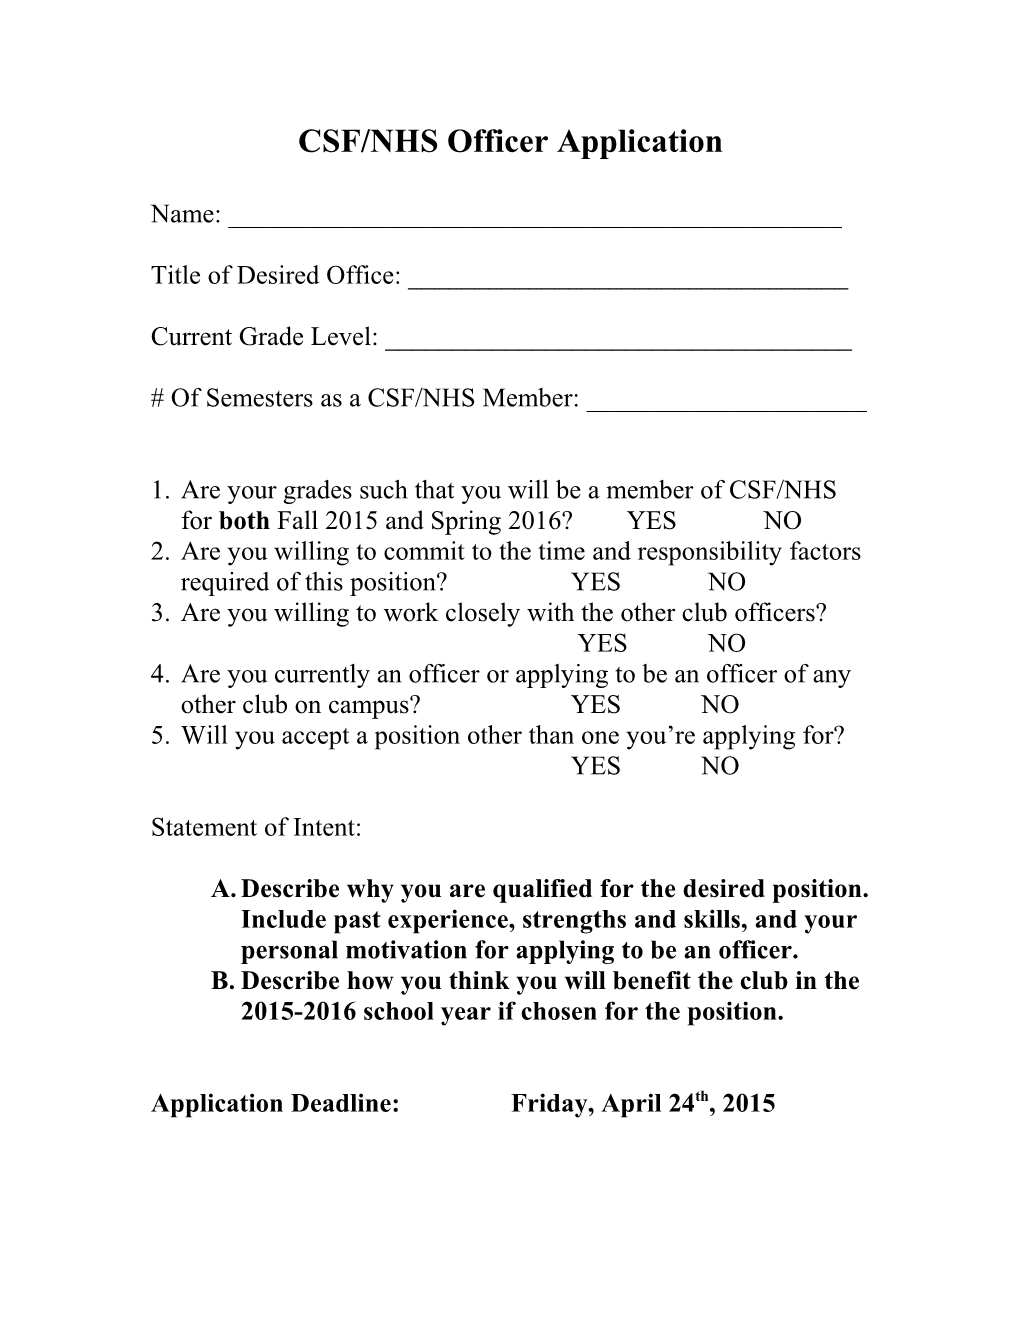 CSF Officer Application